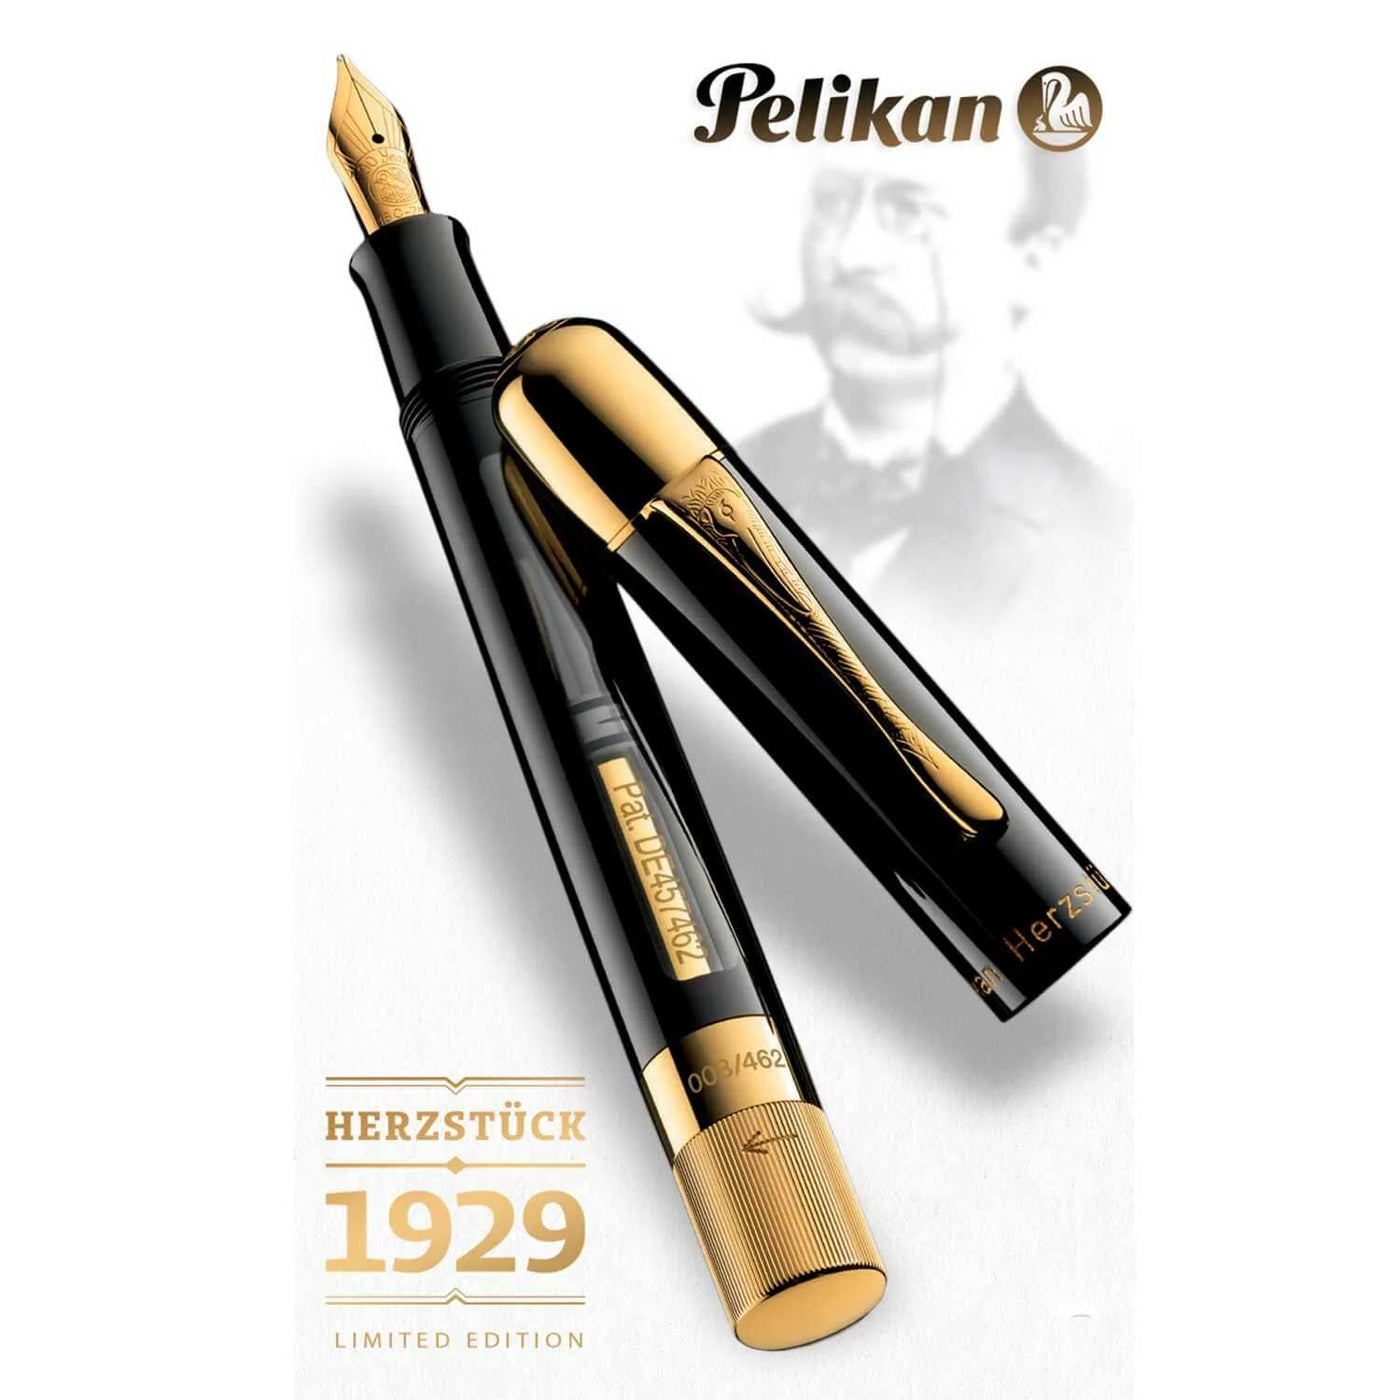 Pelikan Herzstuck 1929 Limited Edition Fountain Pen Black 18K Gold Nib 4